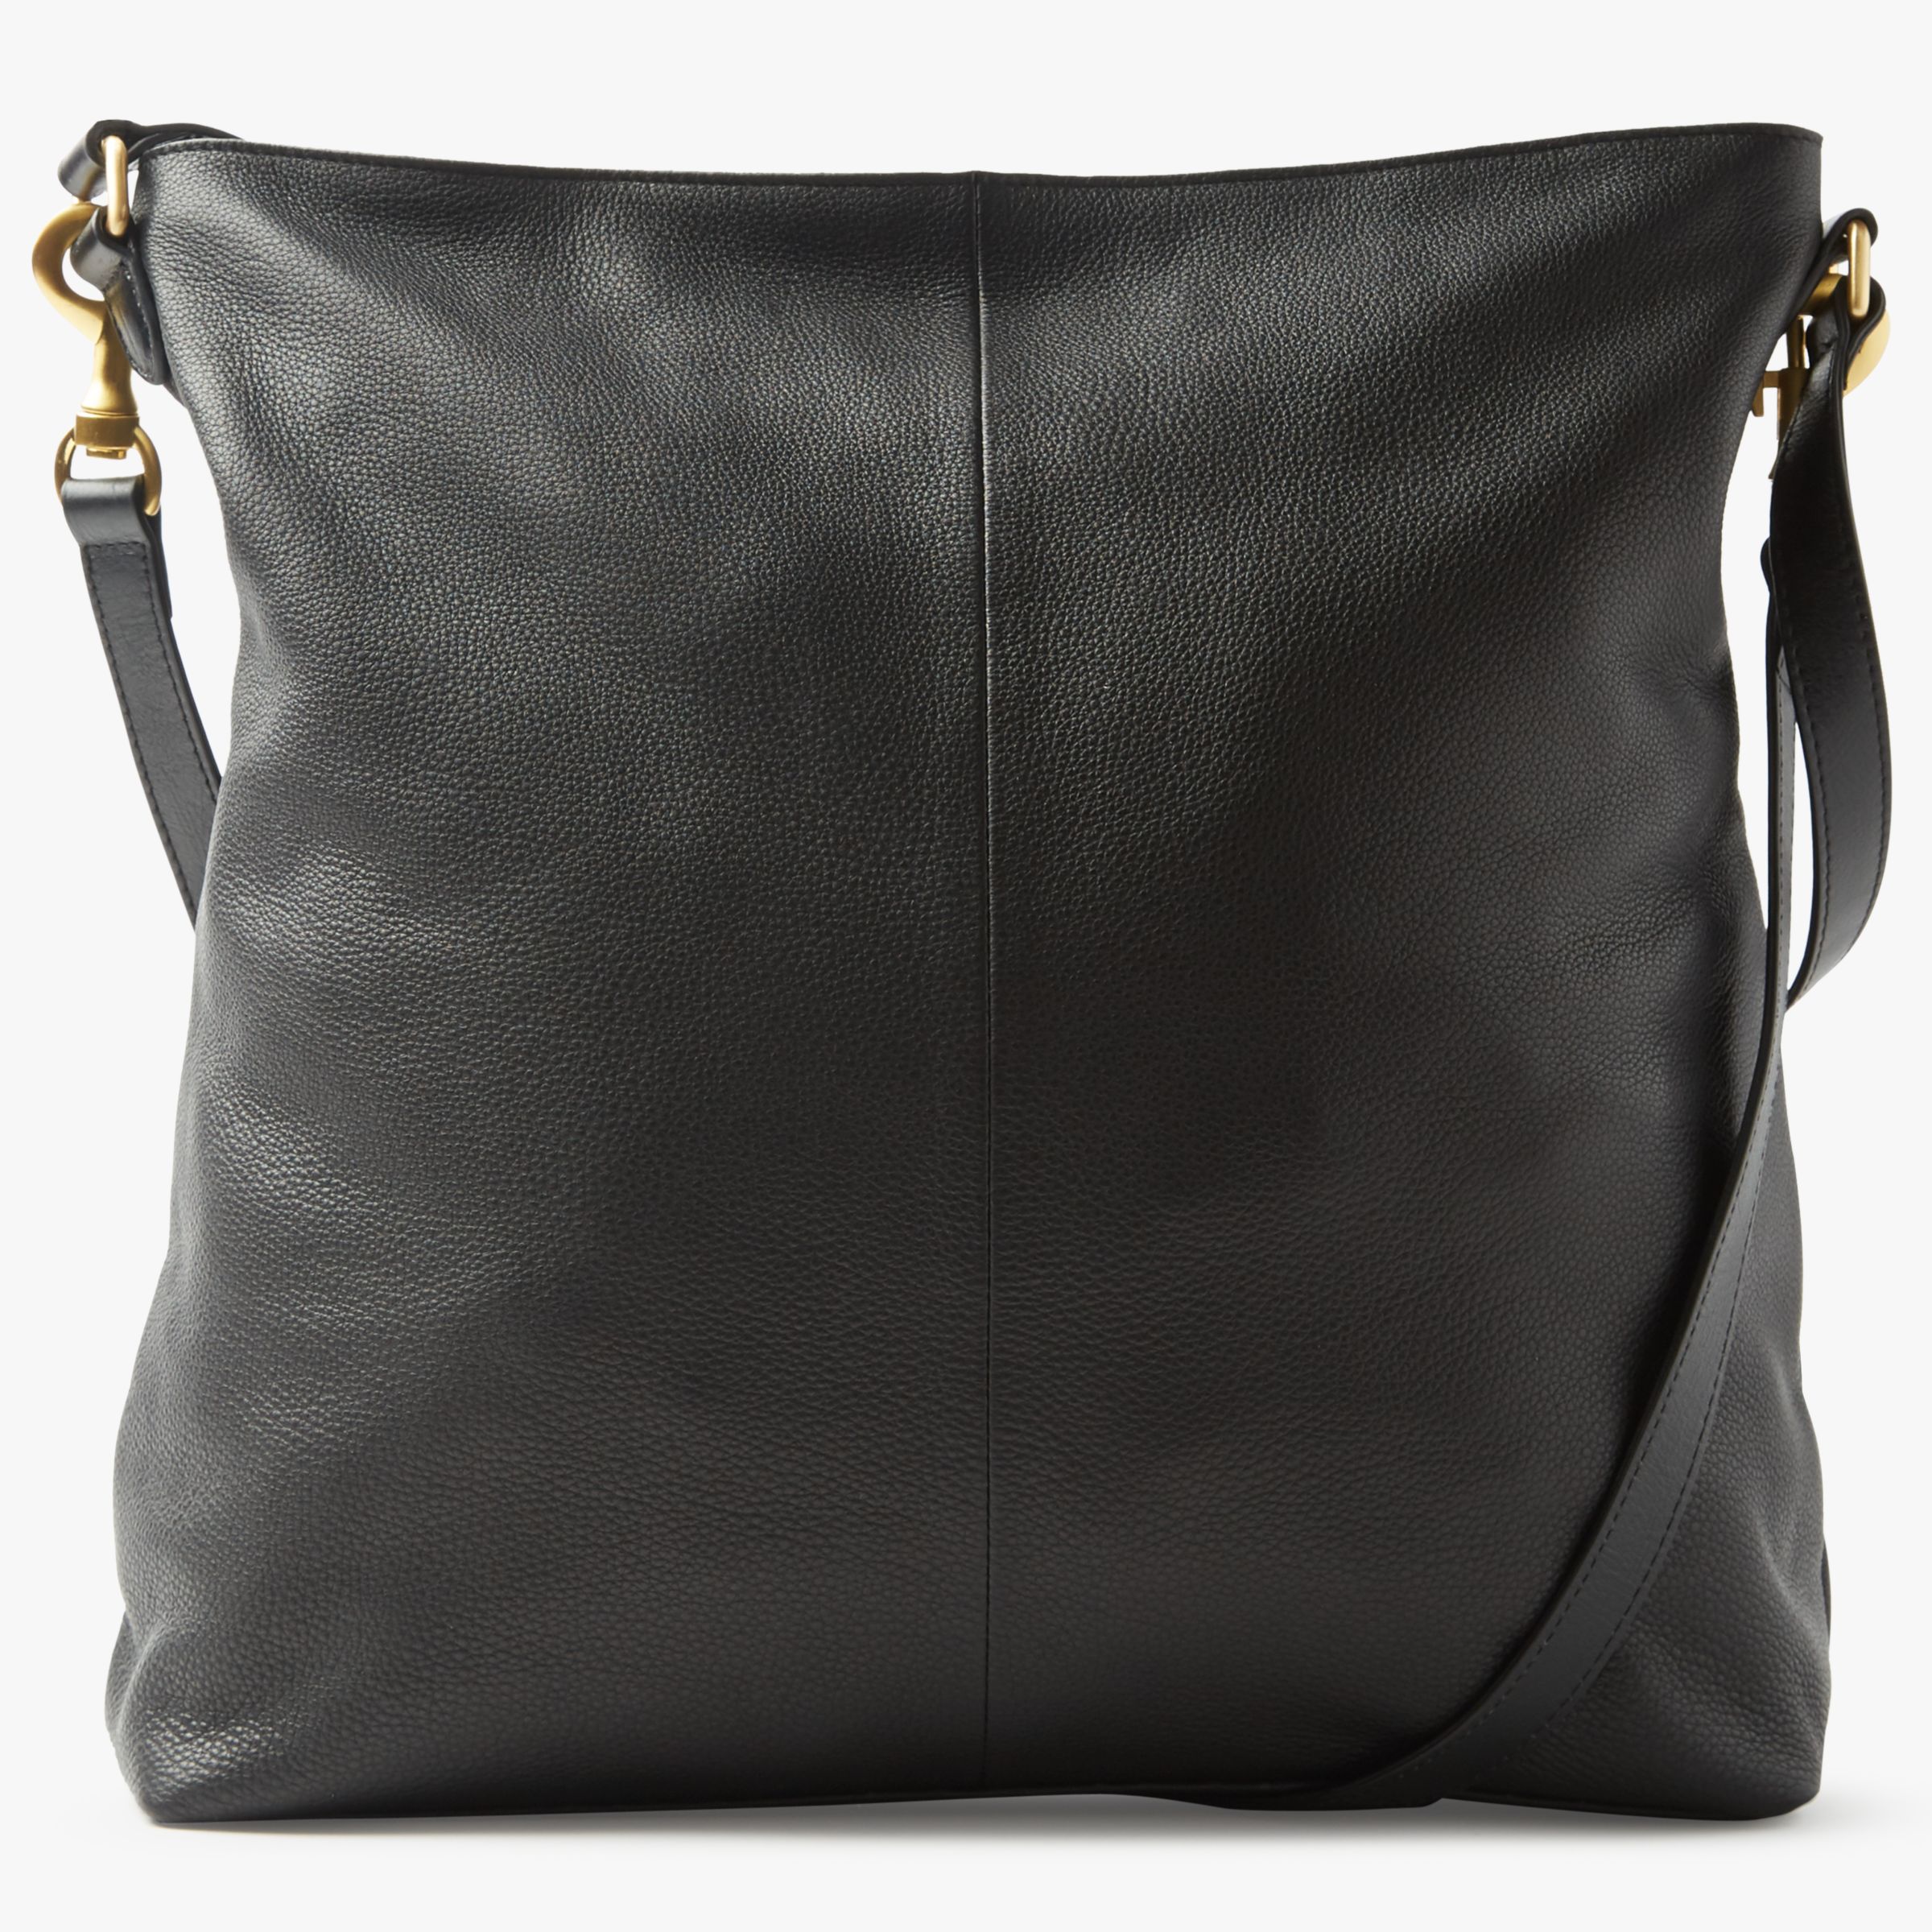 John Lewis & Partners Rhea Leather Hobo Bag at John Lewis & Partners